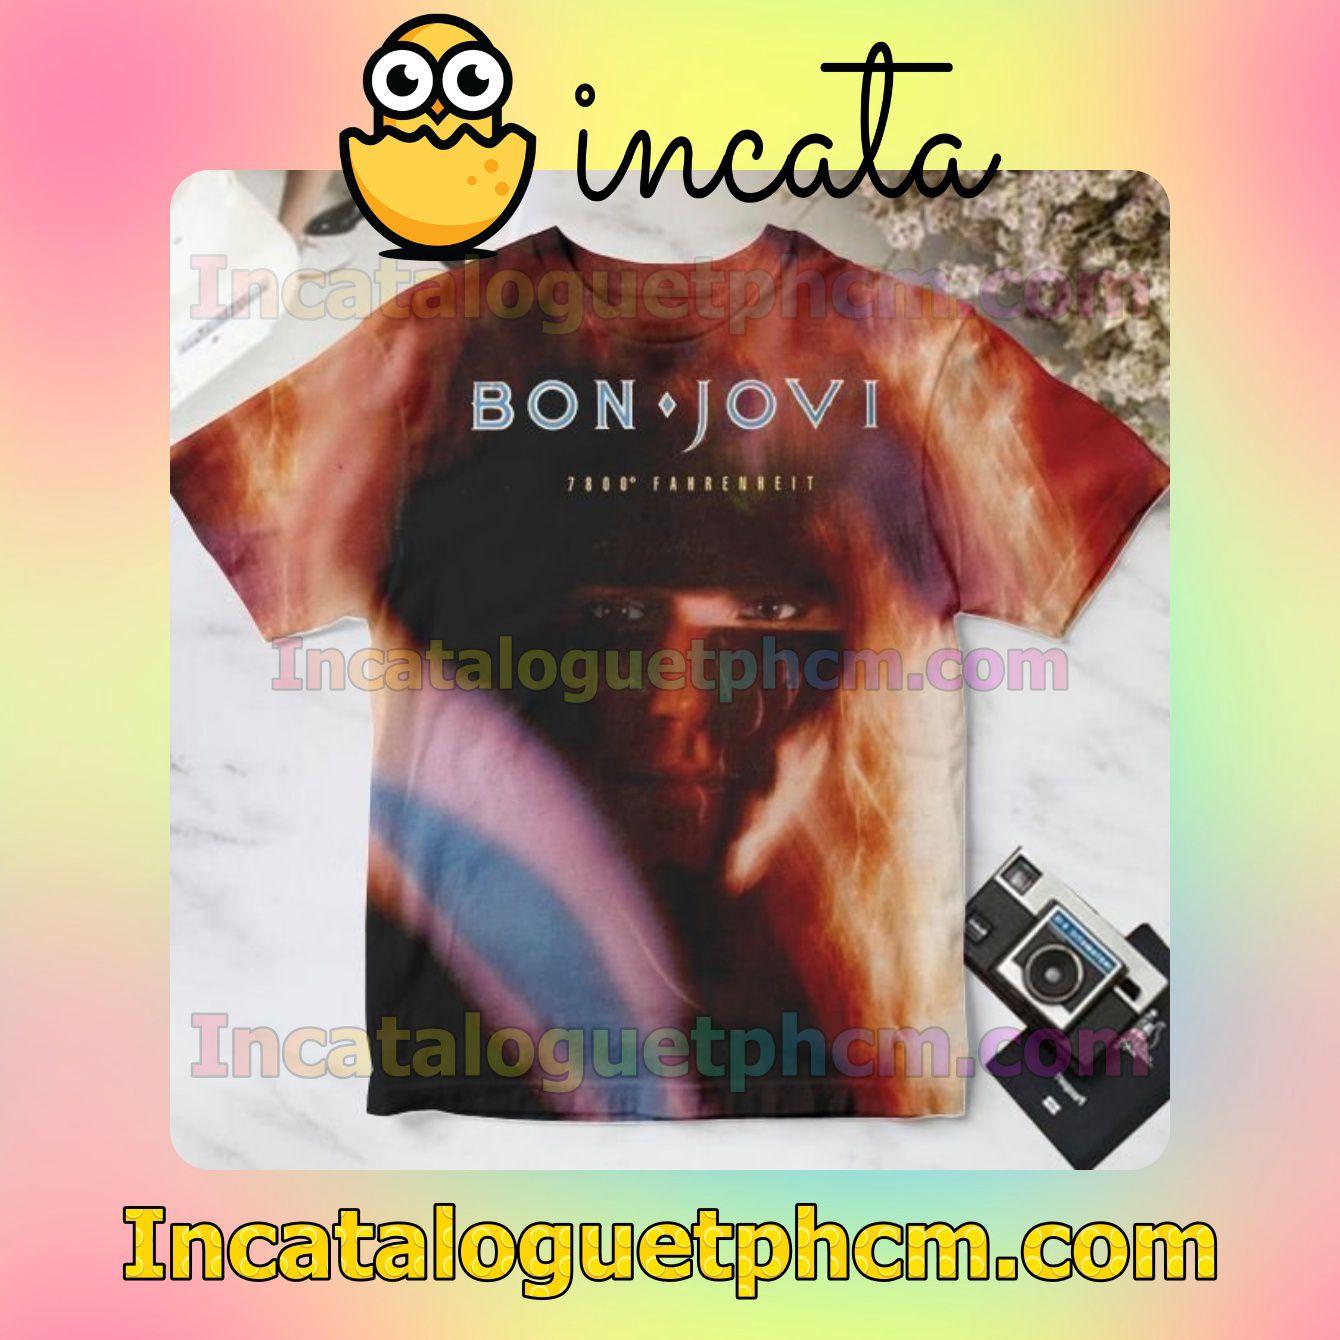 Bon Jovi 7800 Degrees Fahrenheit Album Cover Personalized Shirt